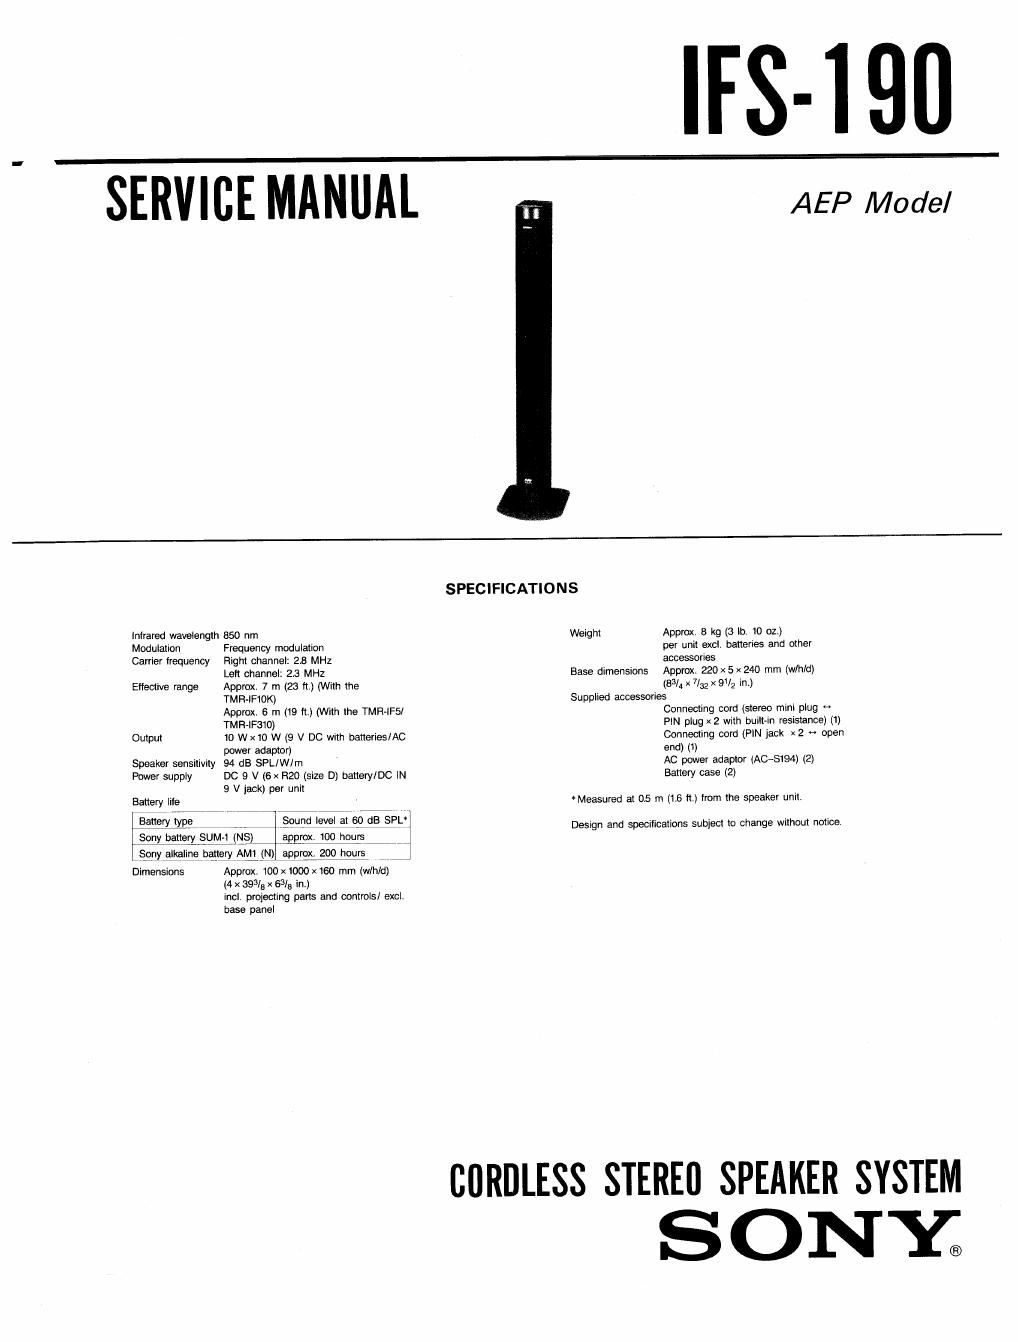 sony ifs 190 service manual